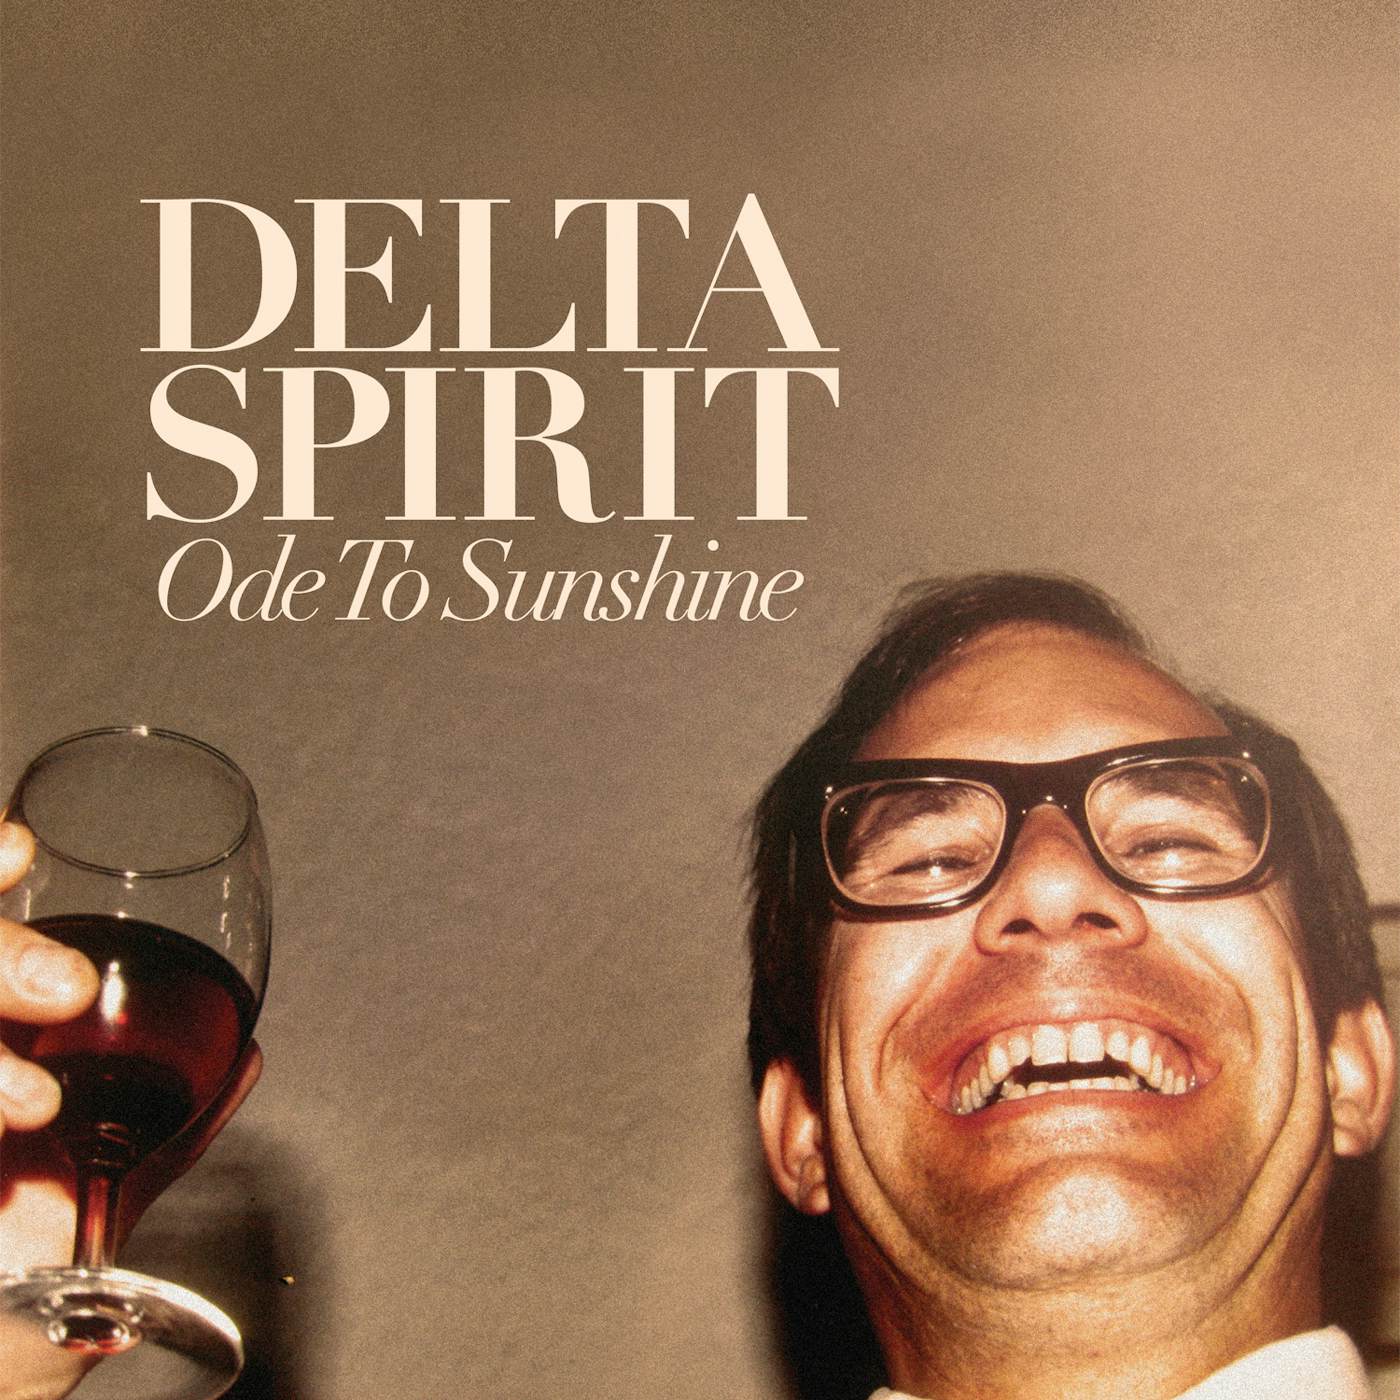 Delta Spirit Ode to Sunshine Vinyl Record